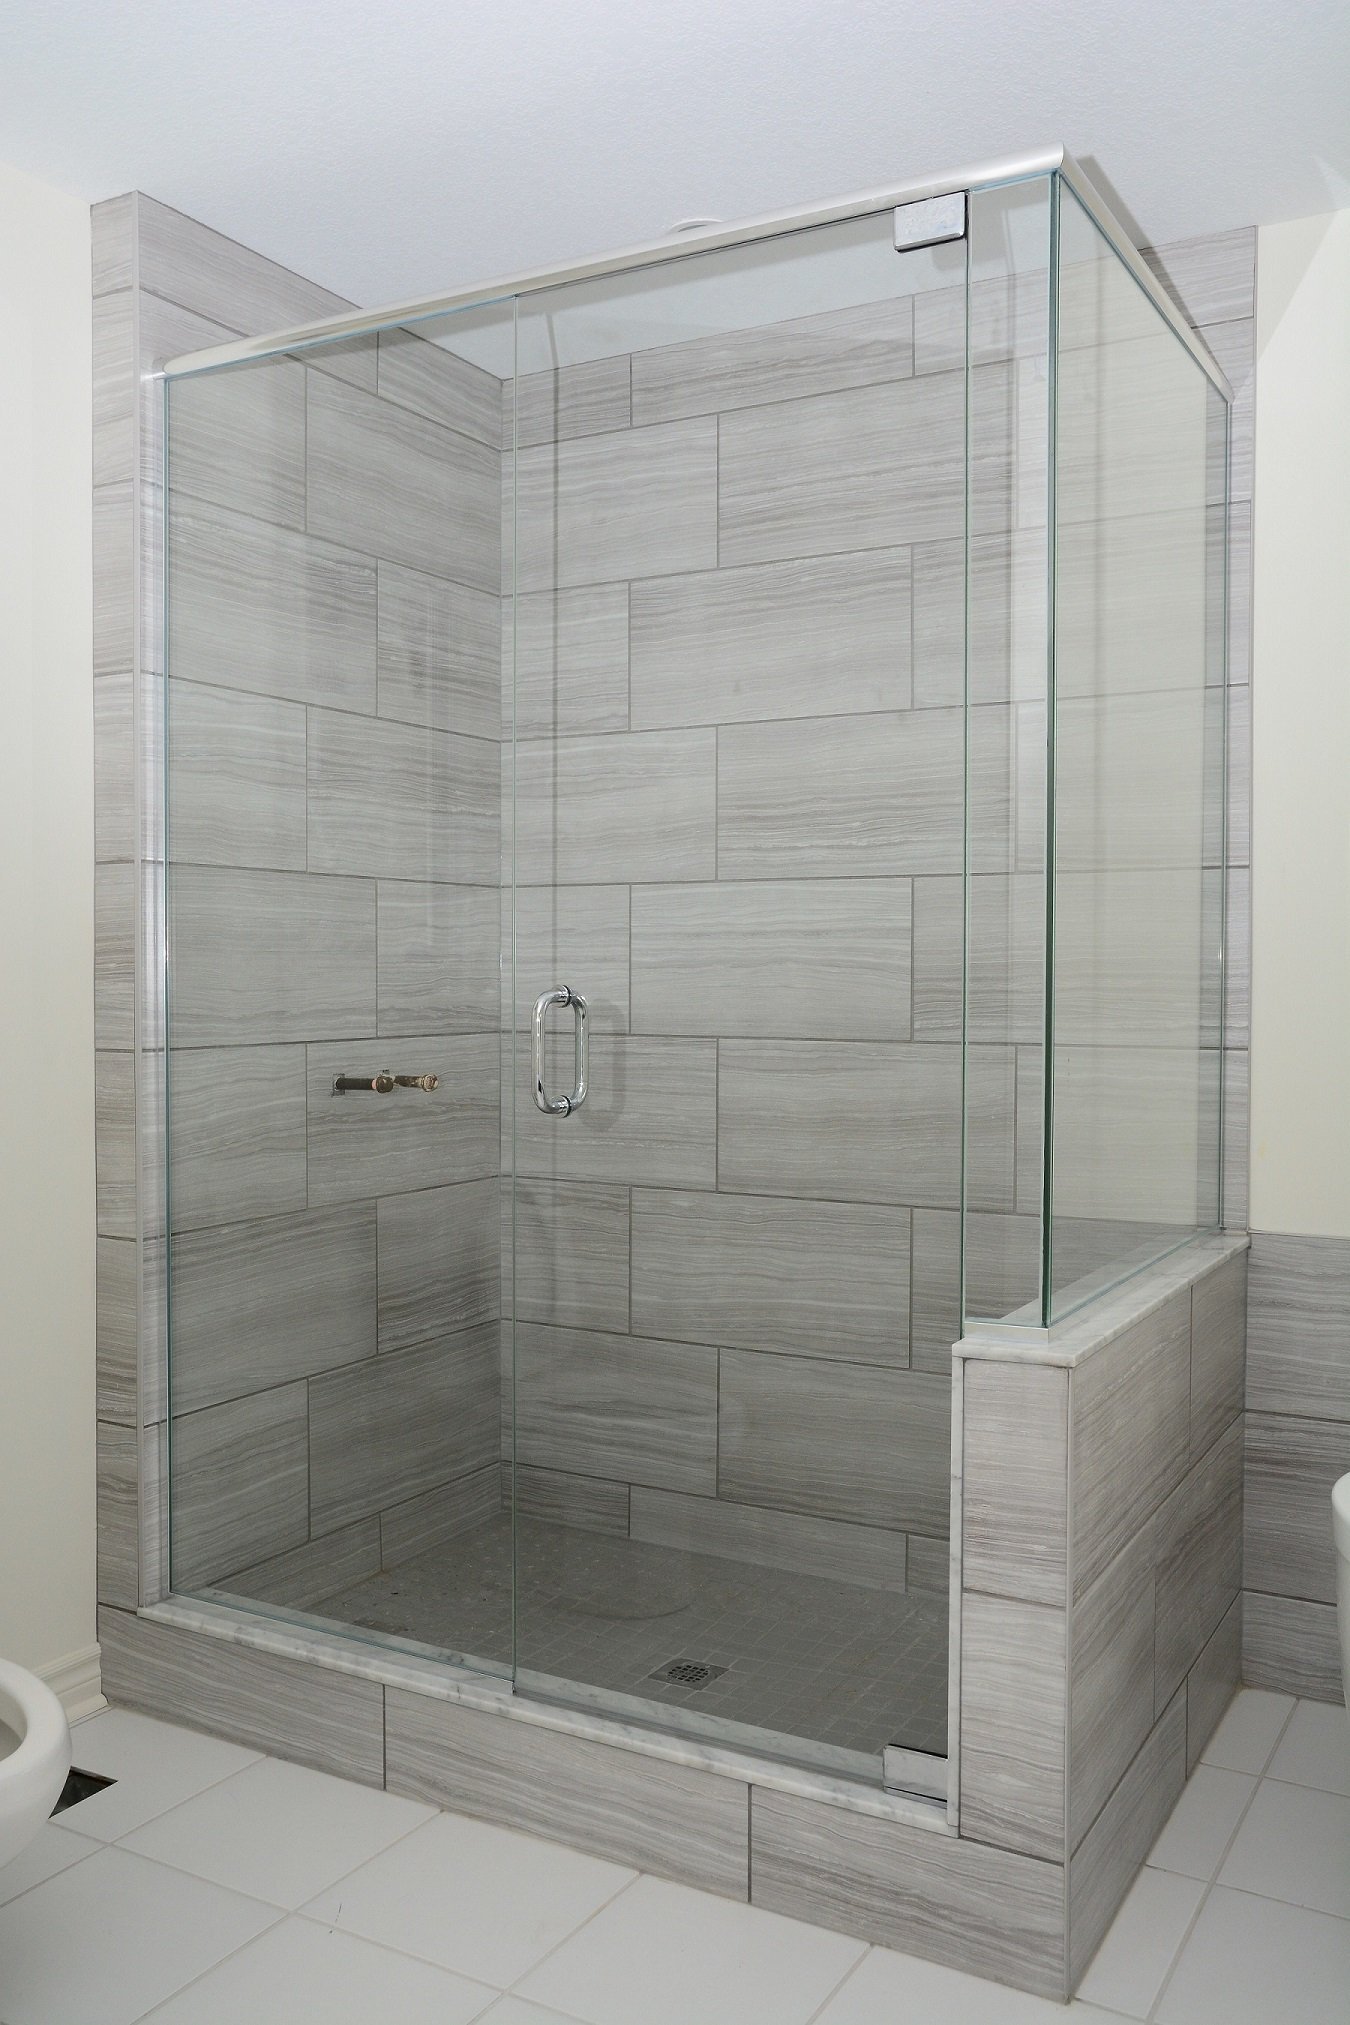 Tiled Bathroom Shower